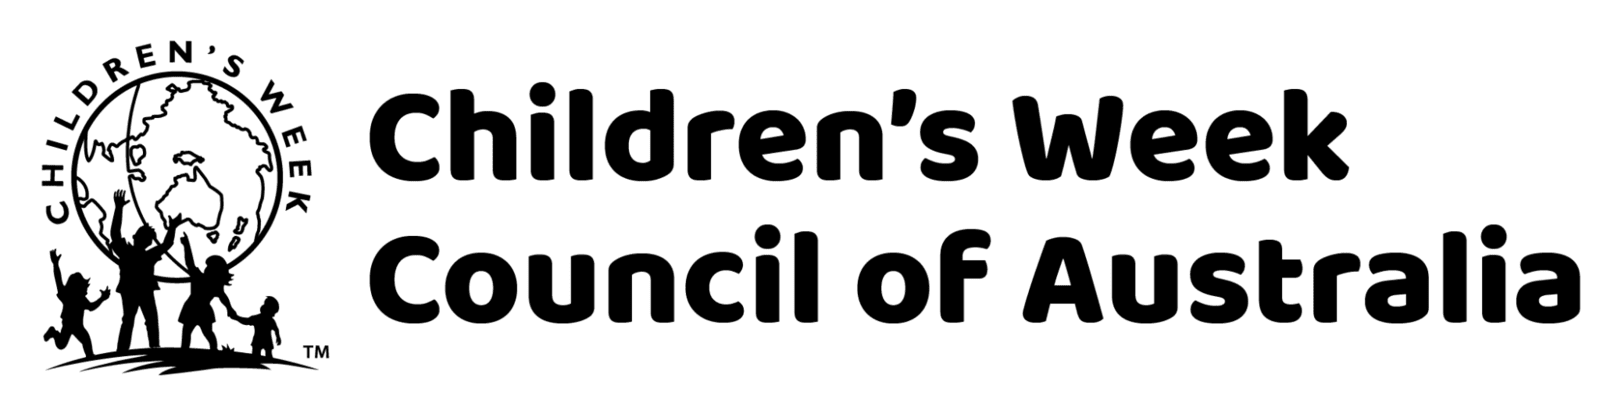 Children's Week Council of Australia